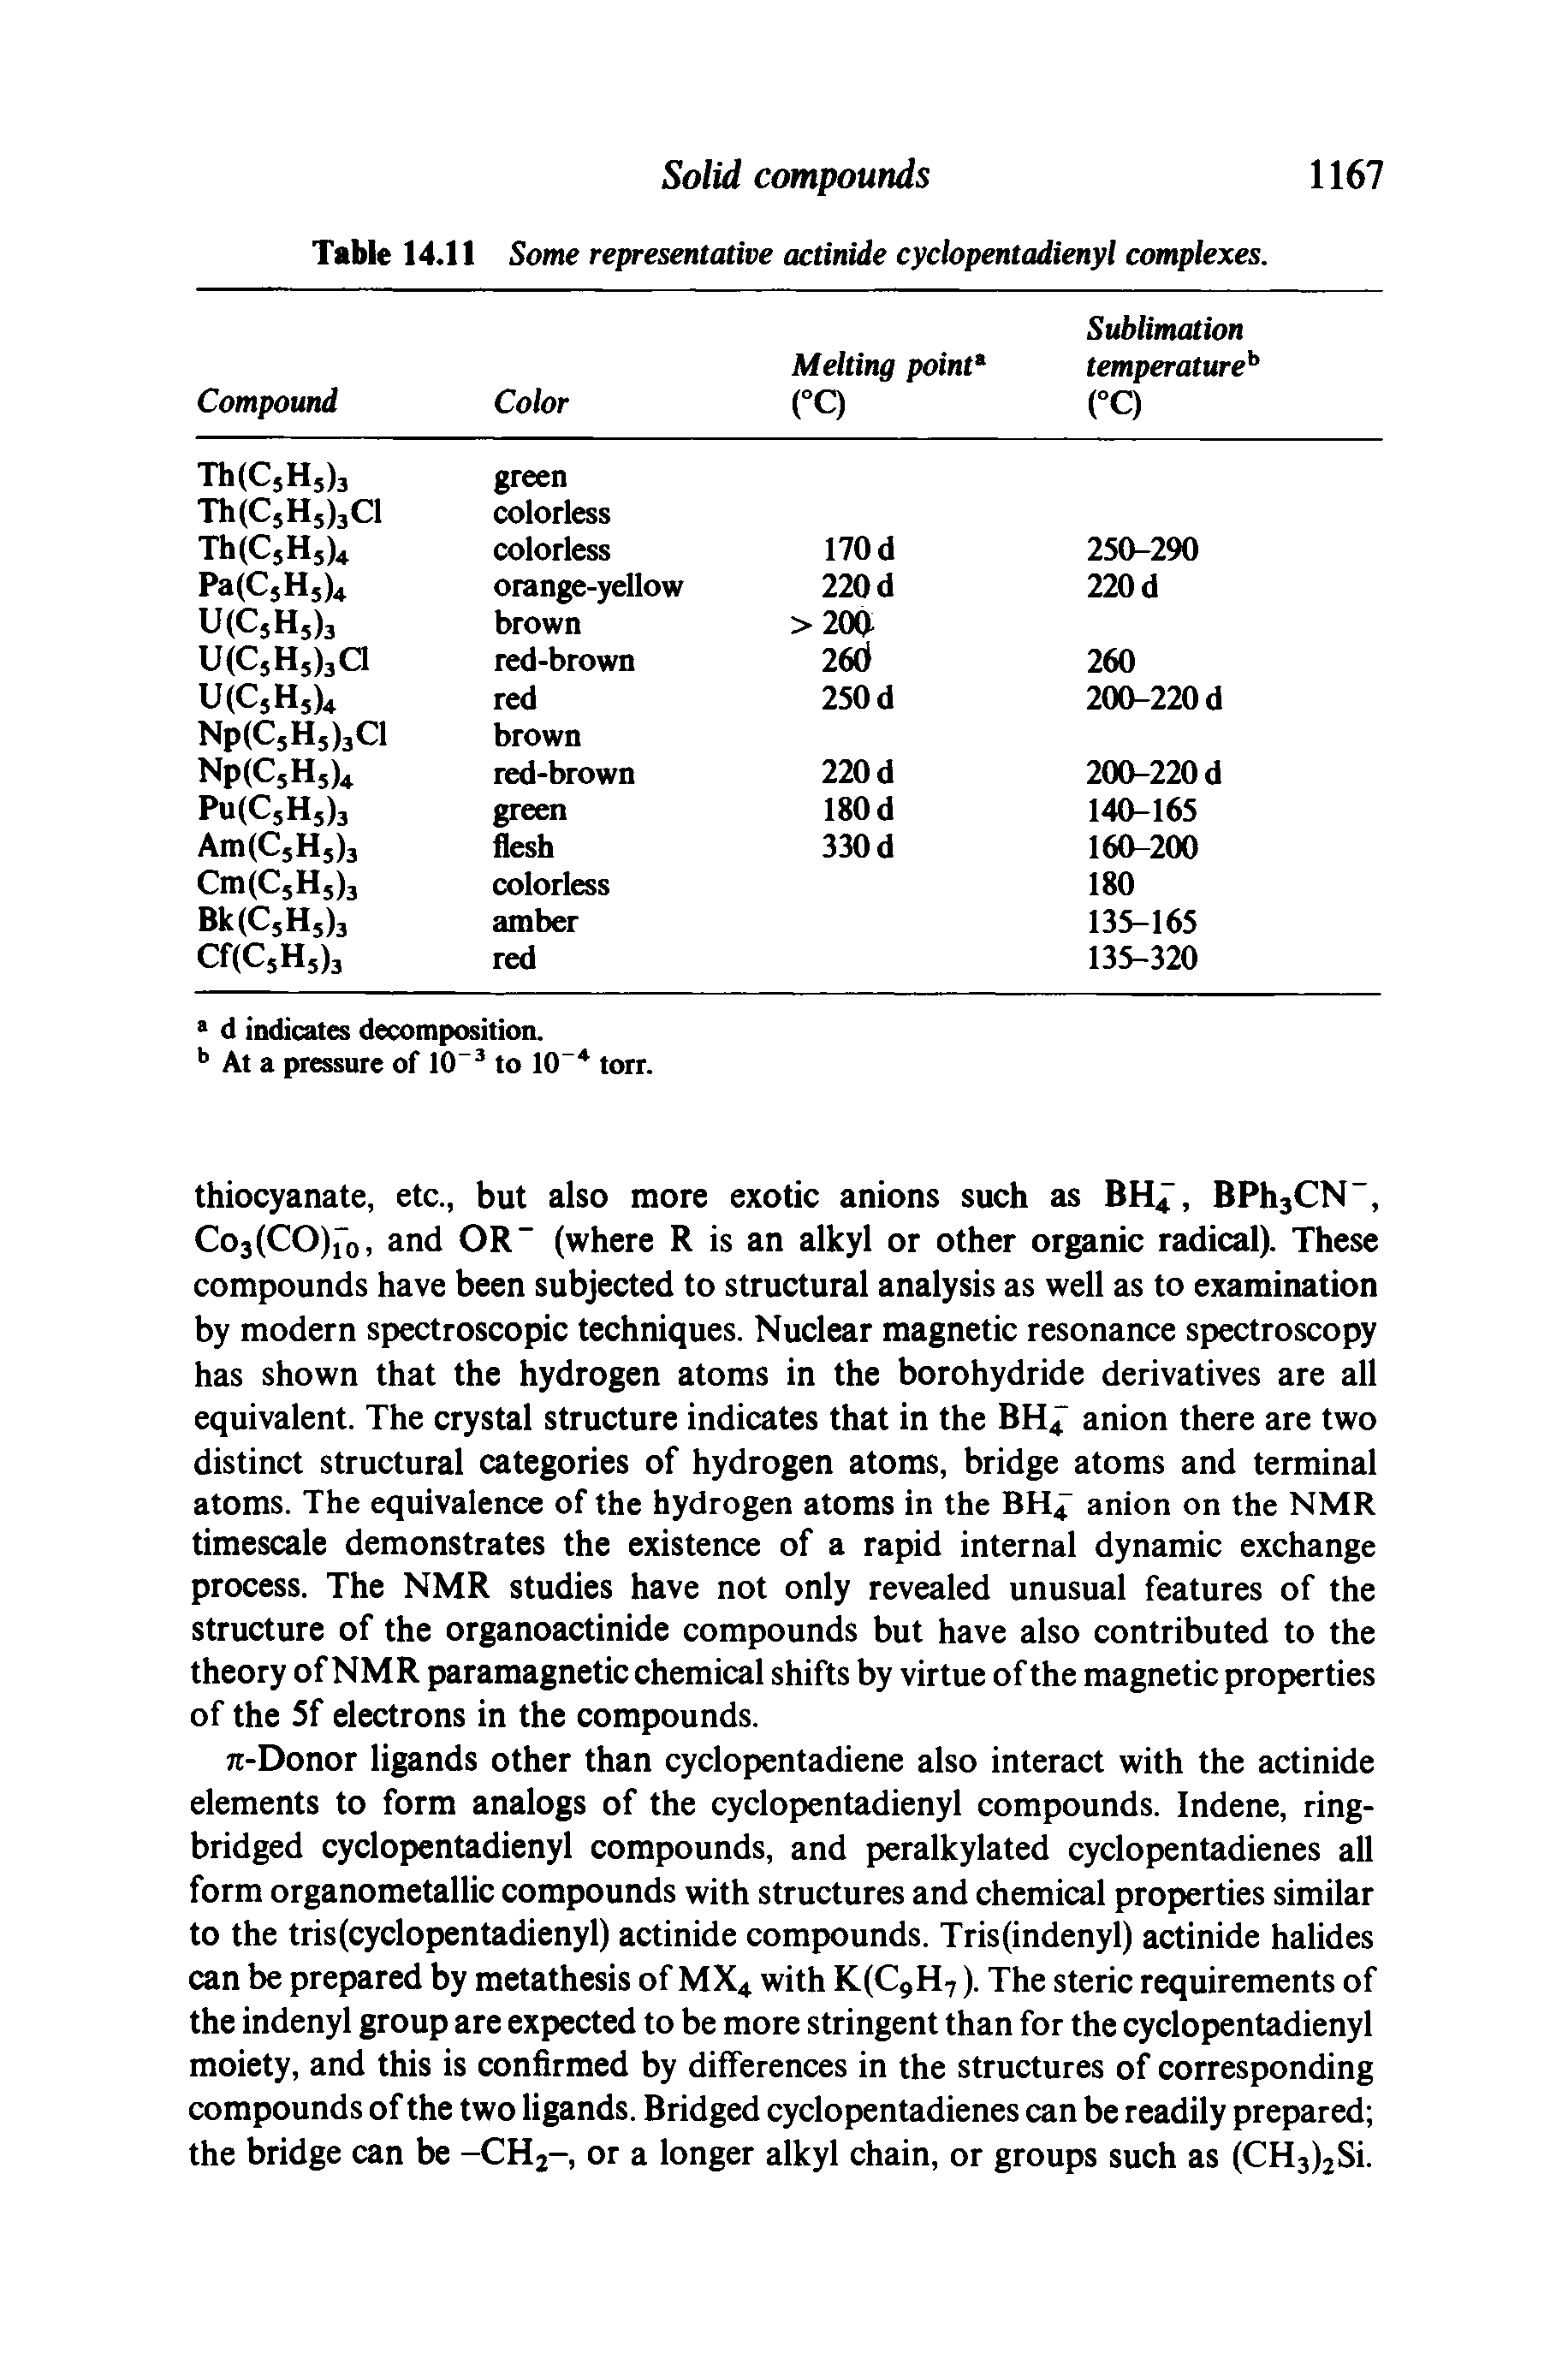 Table 14.11 Some representative actinide cyclopentadienyl complexes.